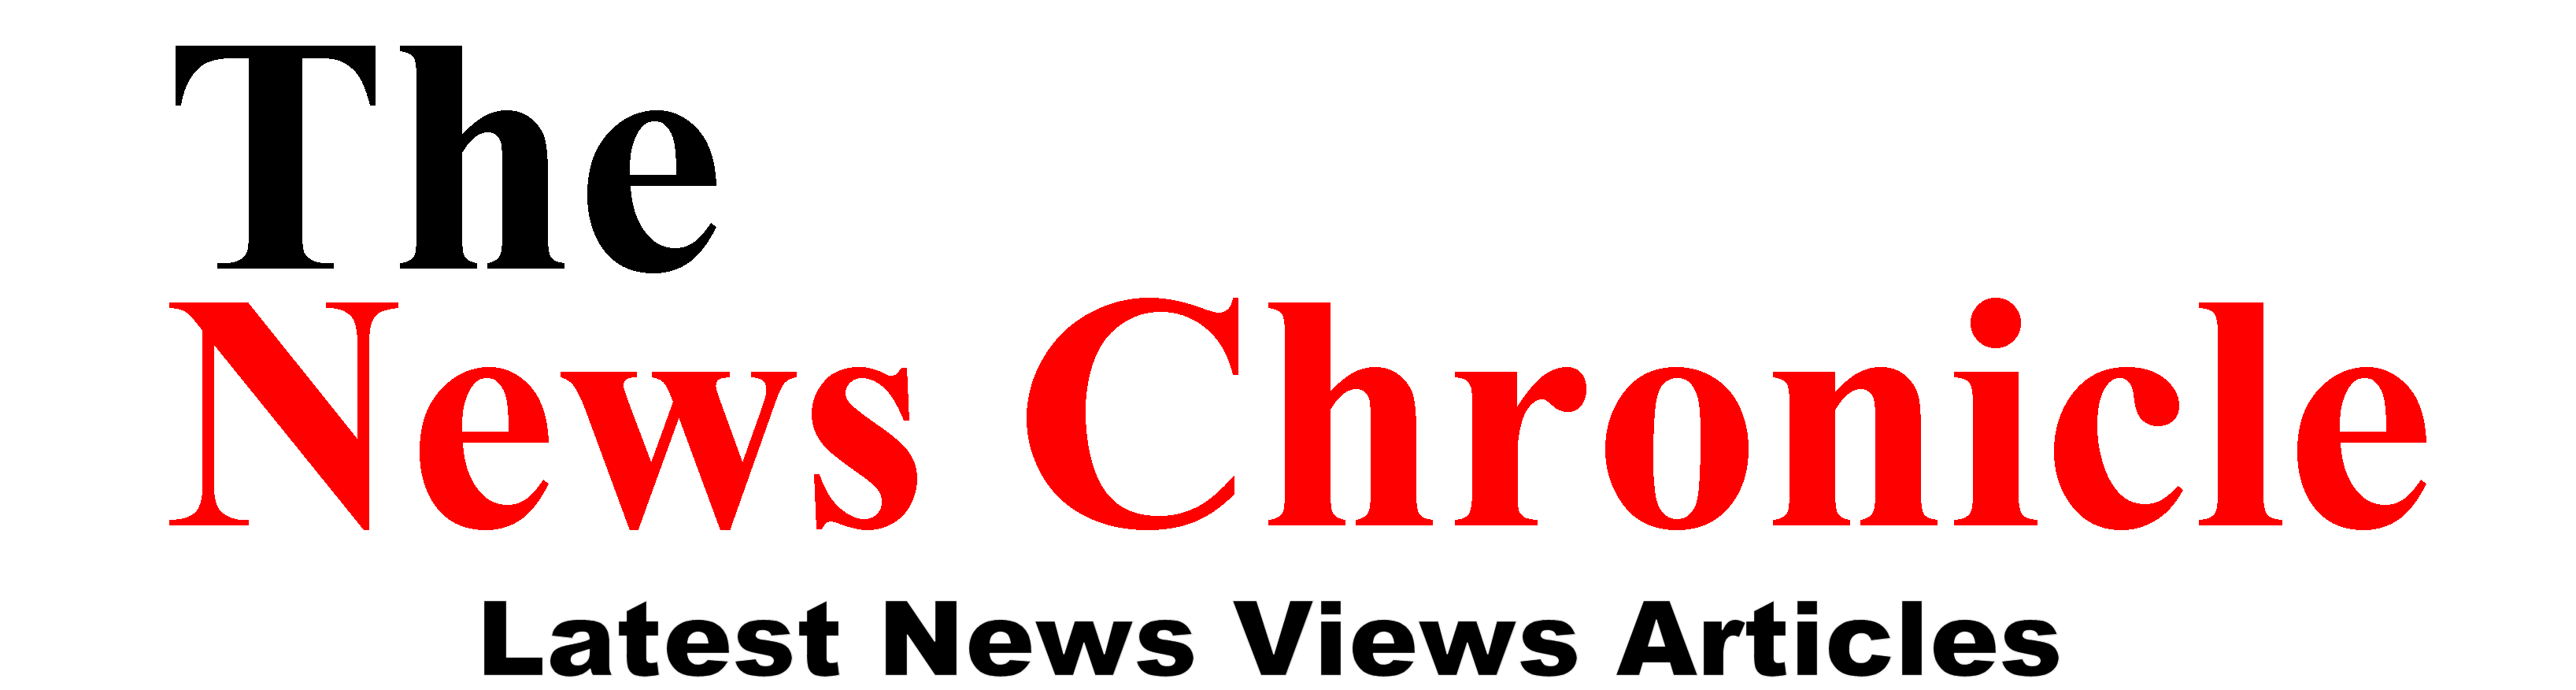 The News Chronicle